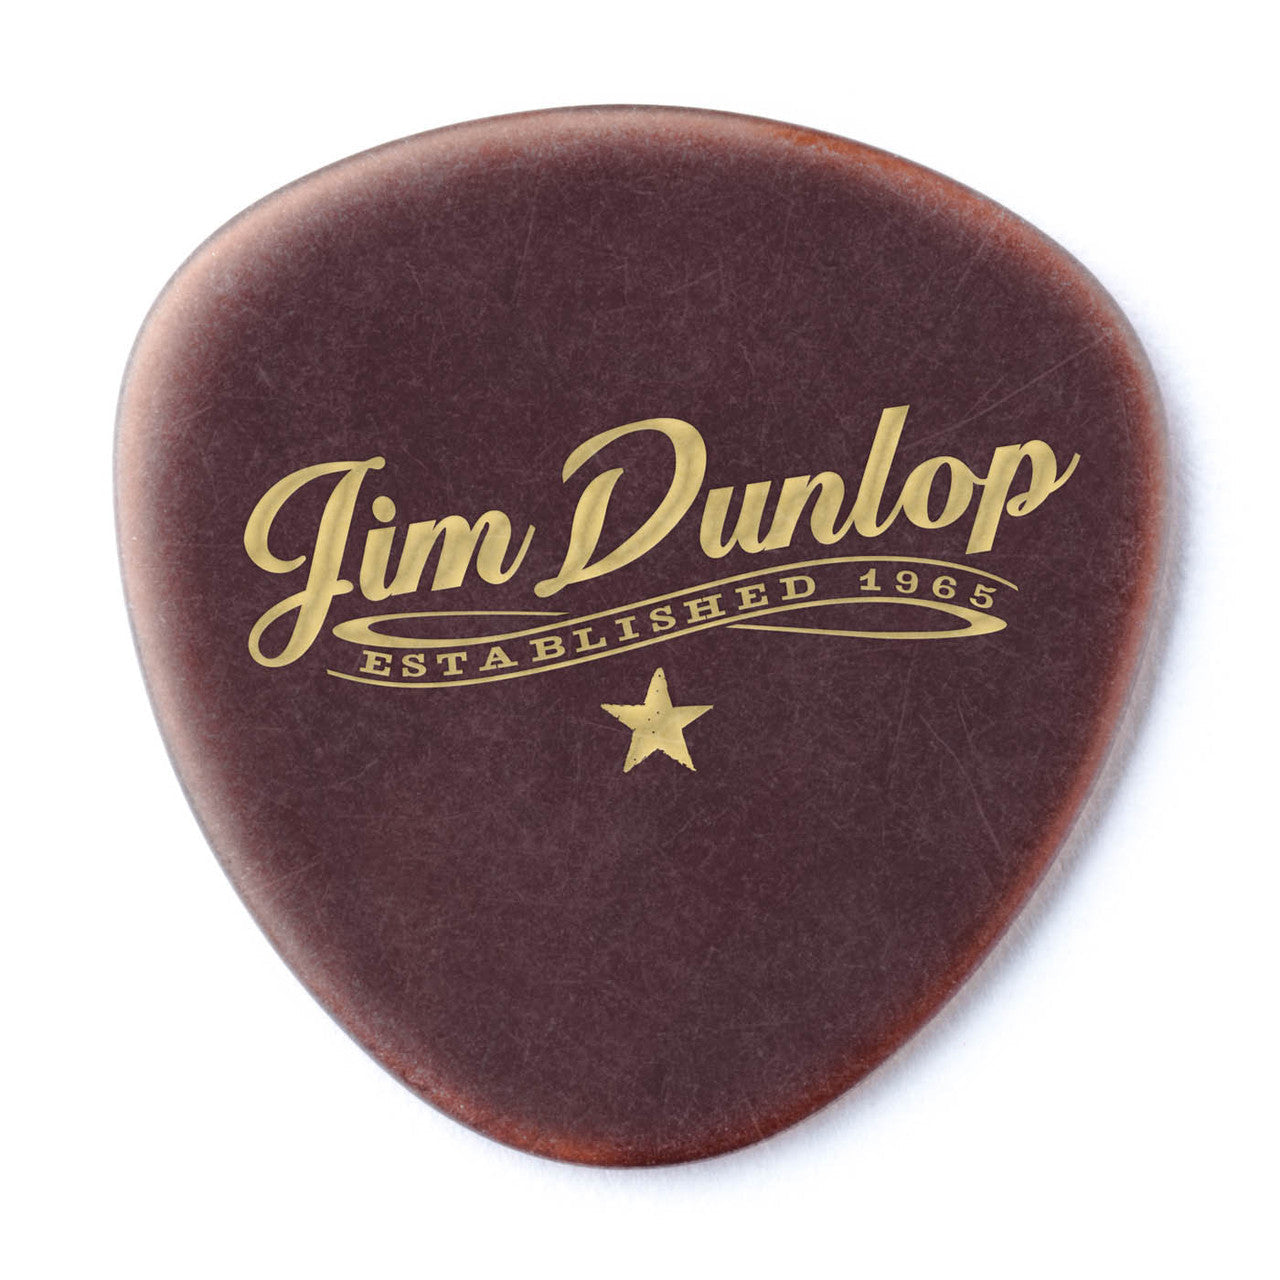 Dunlop Americana™ Round Triangle Flat Pick 1.5mm | 3-Pack